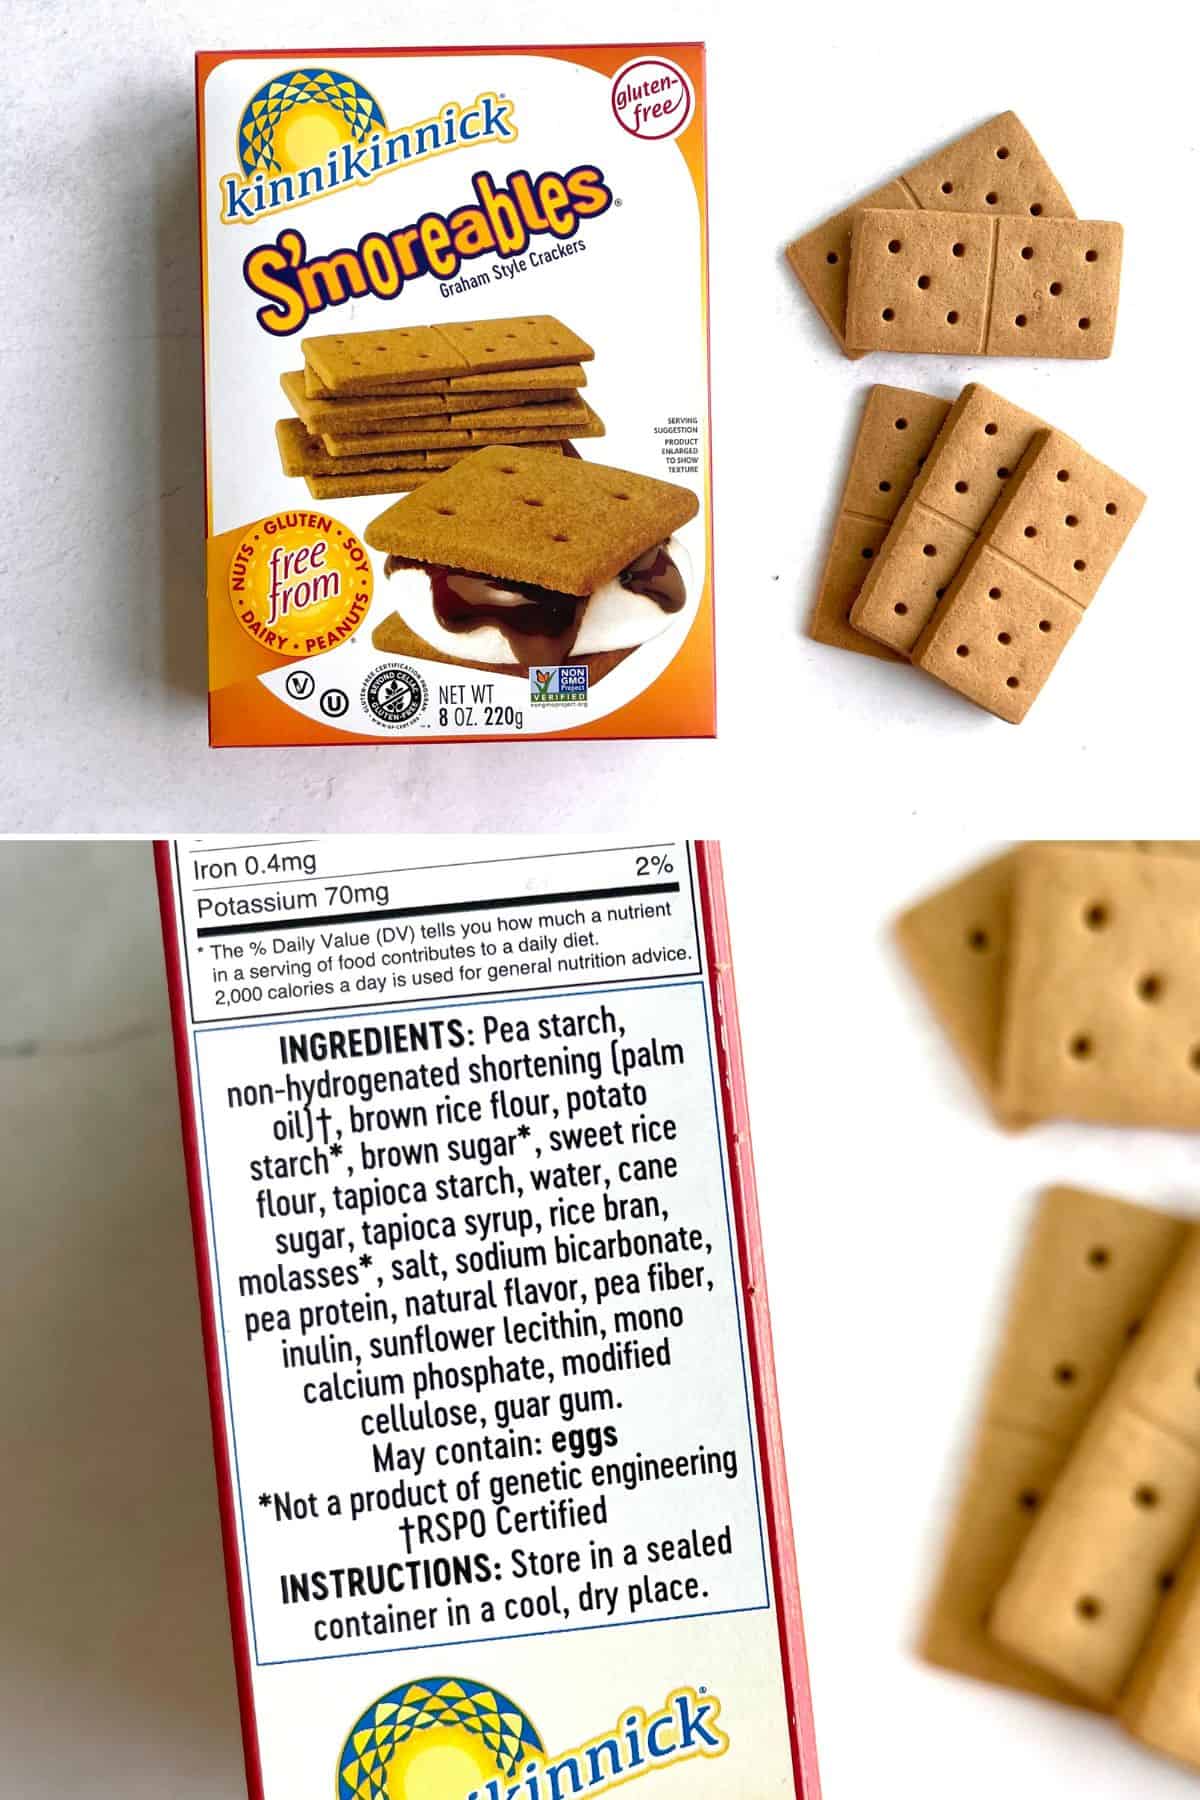 A box of KinniKinnick gluten-free graham crackers on a countertop